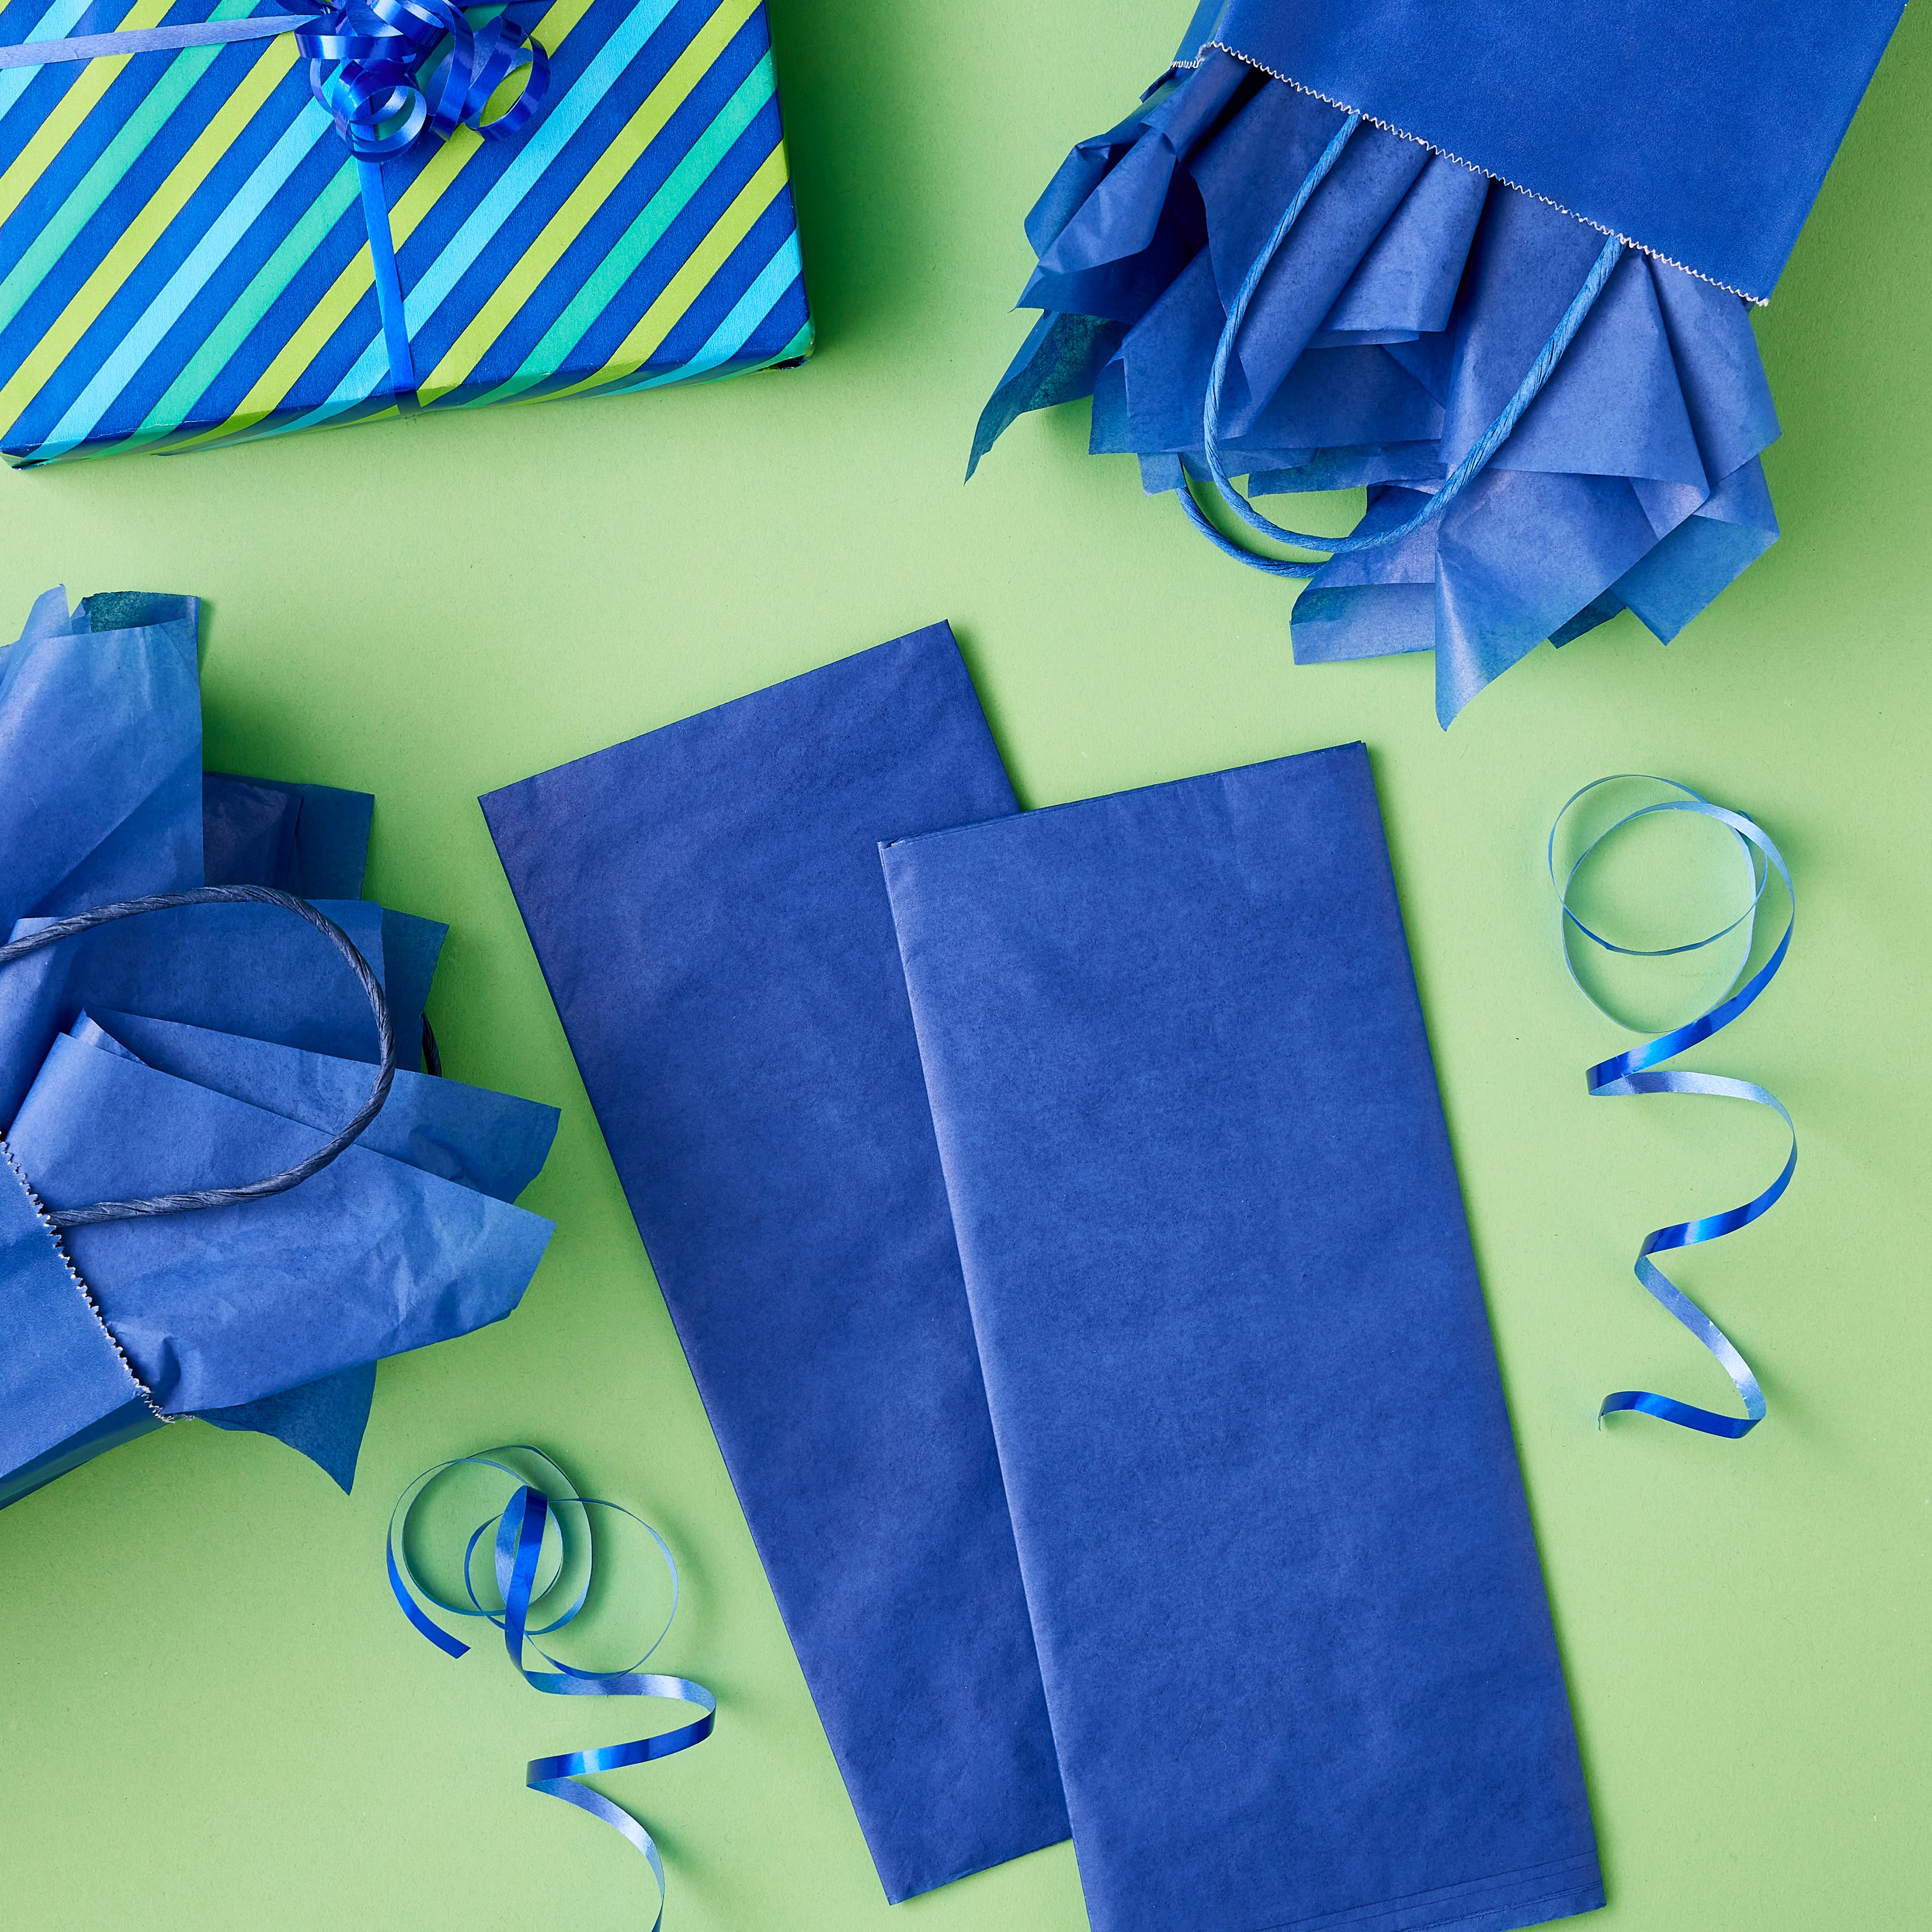 Light Blue Tissue Paper | 24 Sheets Light Blue Tissue Paper | 20”x 30”  Tissue Paper Sheets | Light Blue Party Decor | Light Blue Gift Wrap